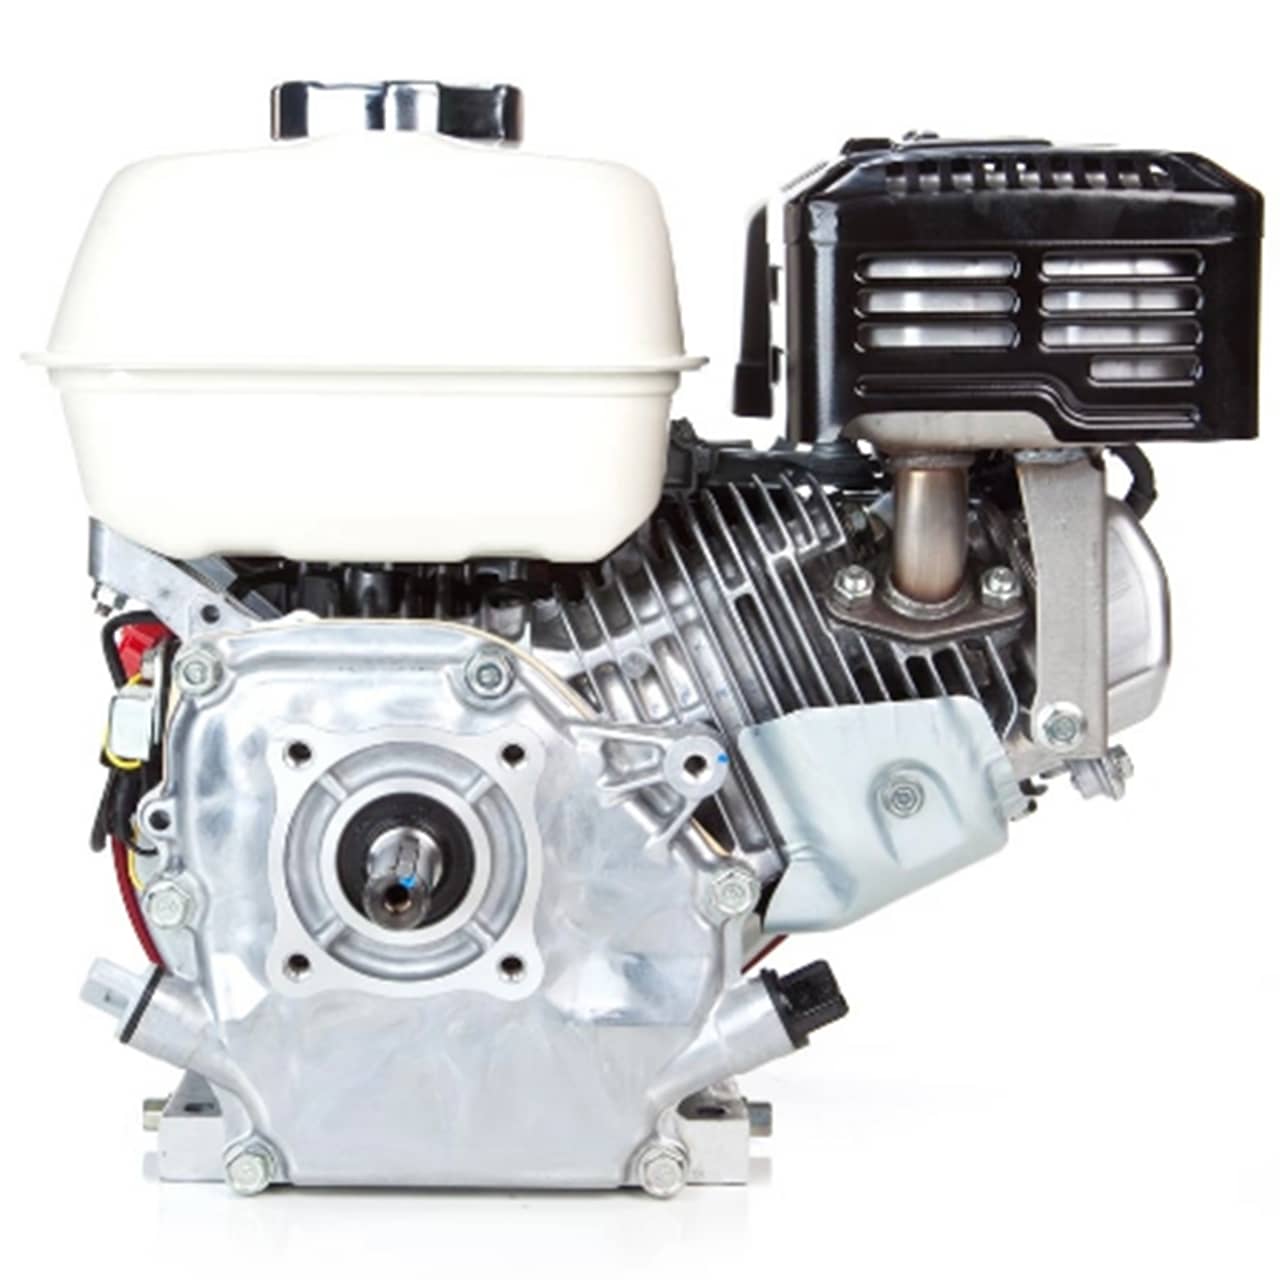 Rabeta Barco 2,0 M Com Motor Honda Gx 160 5.5 Hp Gasolina - Foto 3